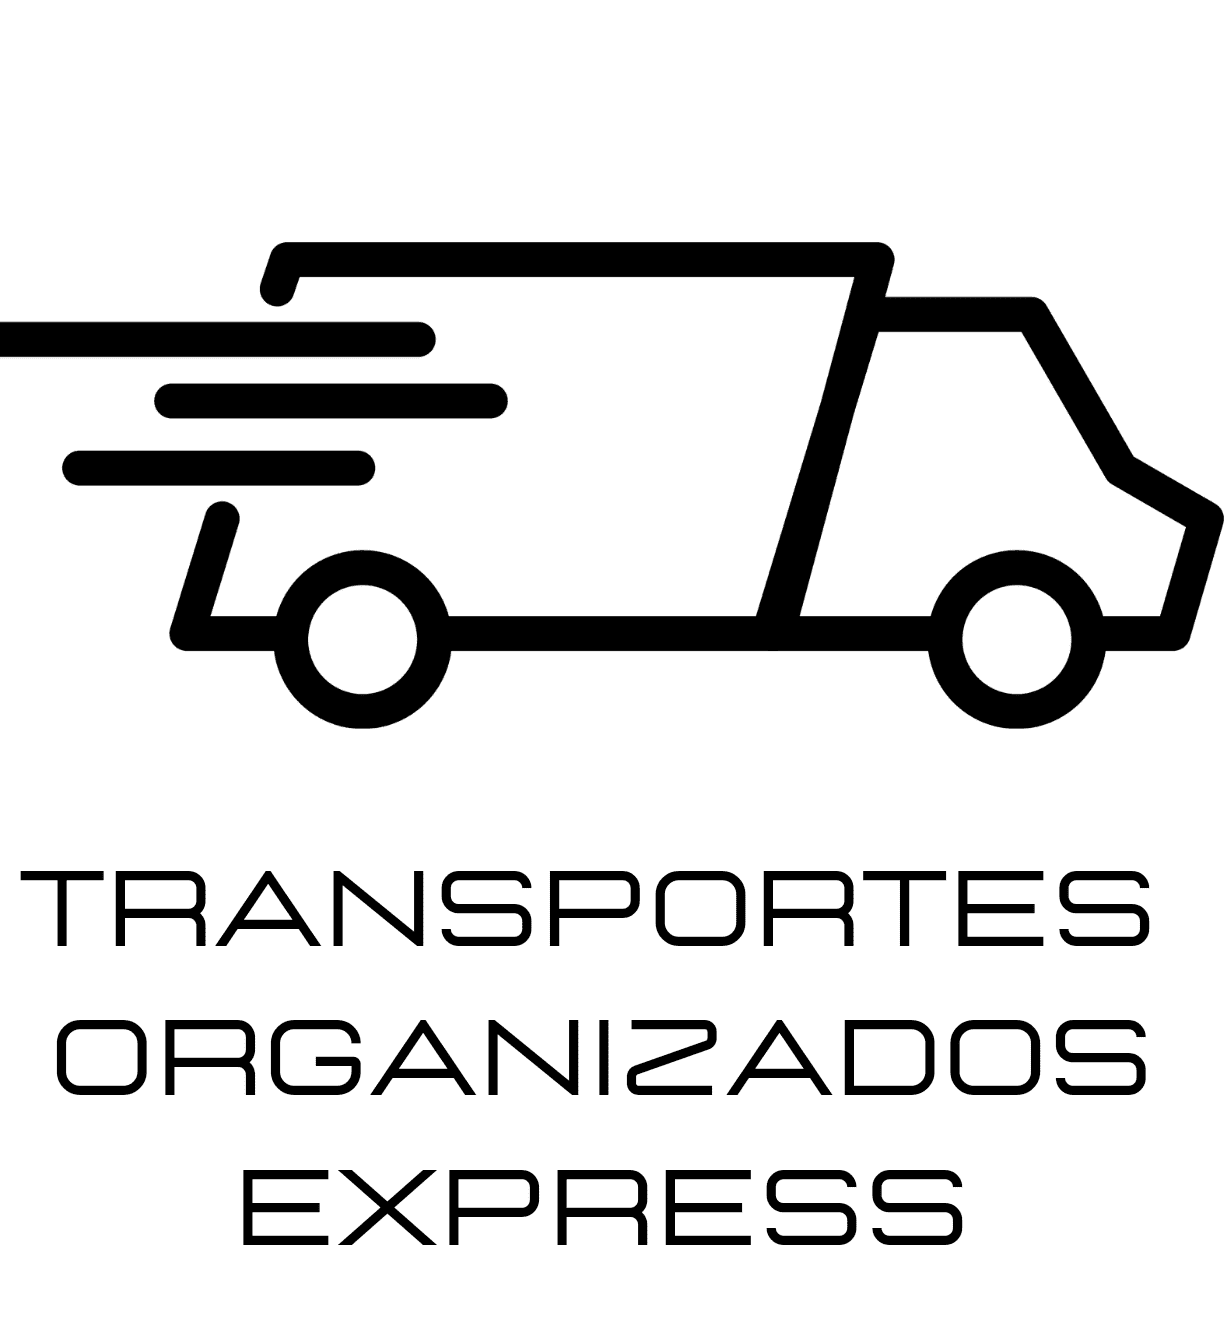 Transportes Organizados Express